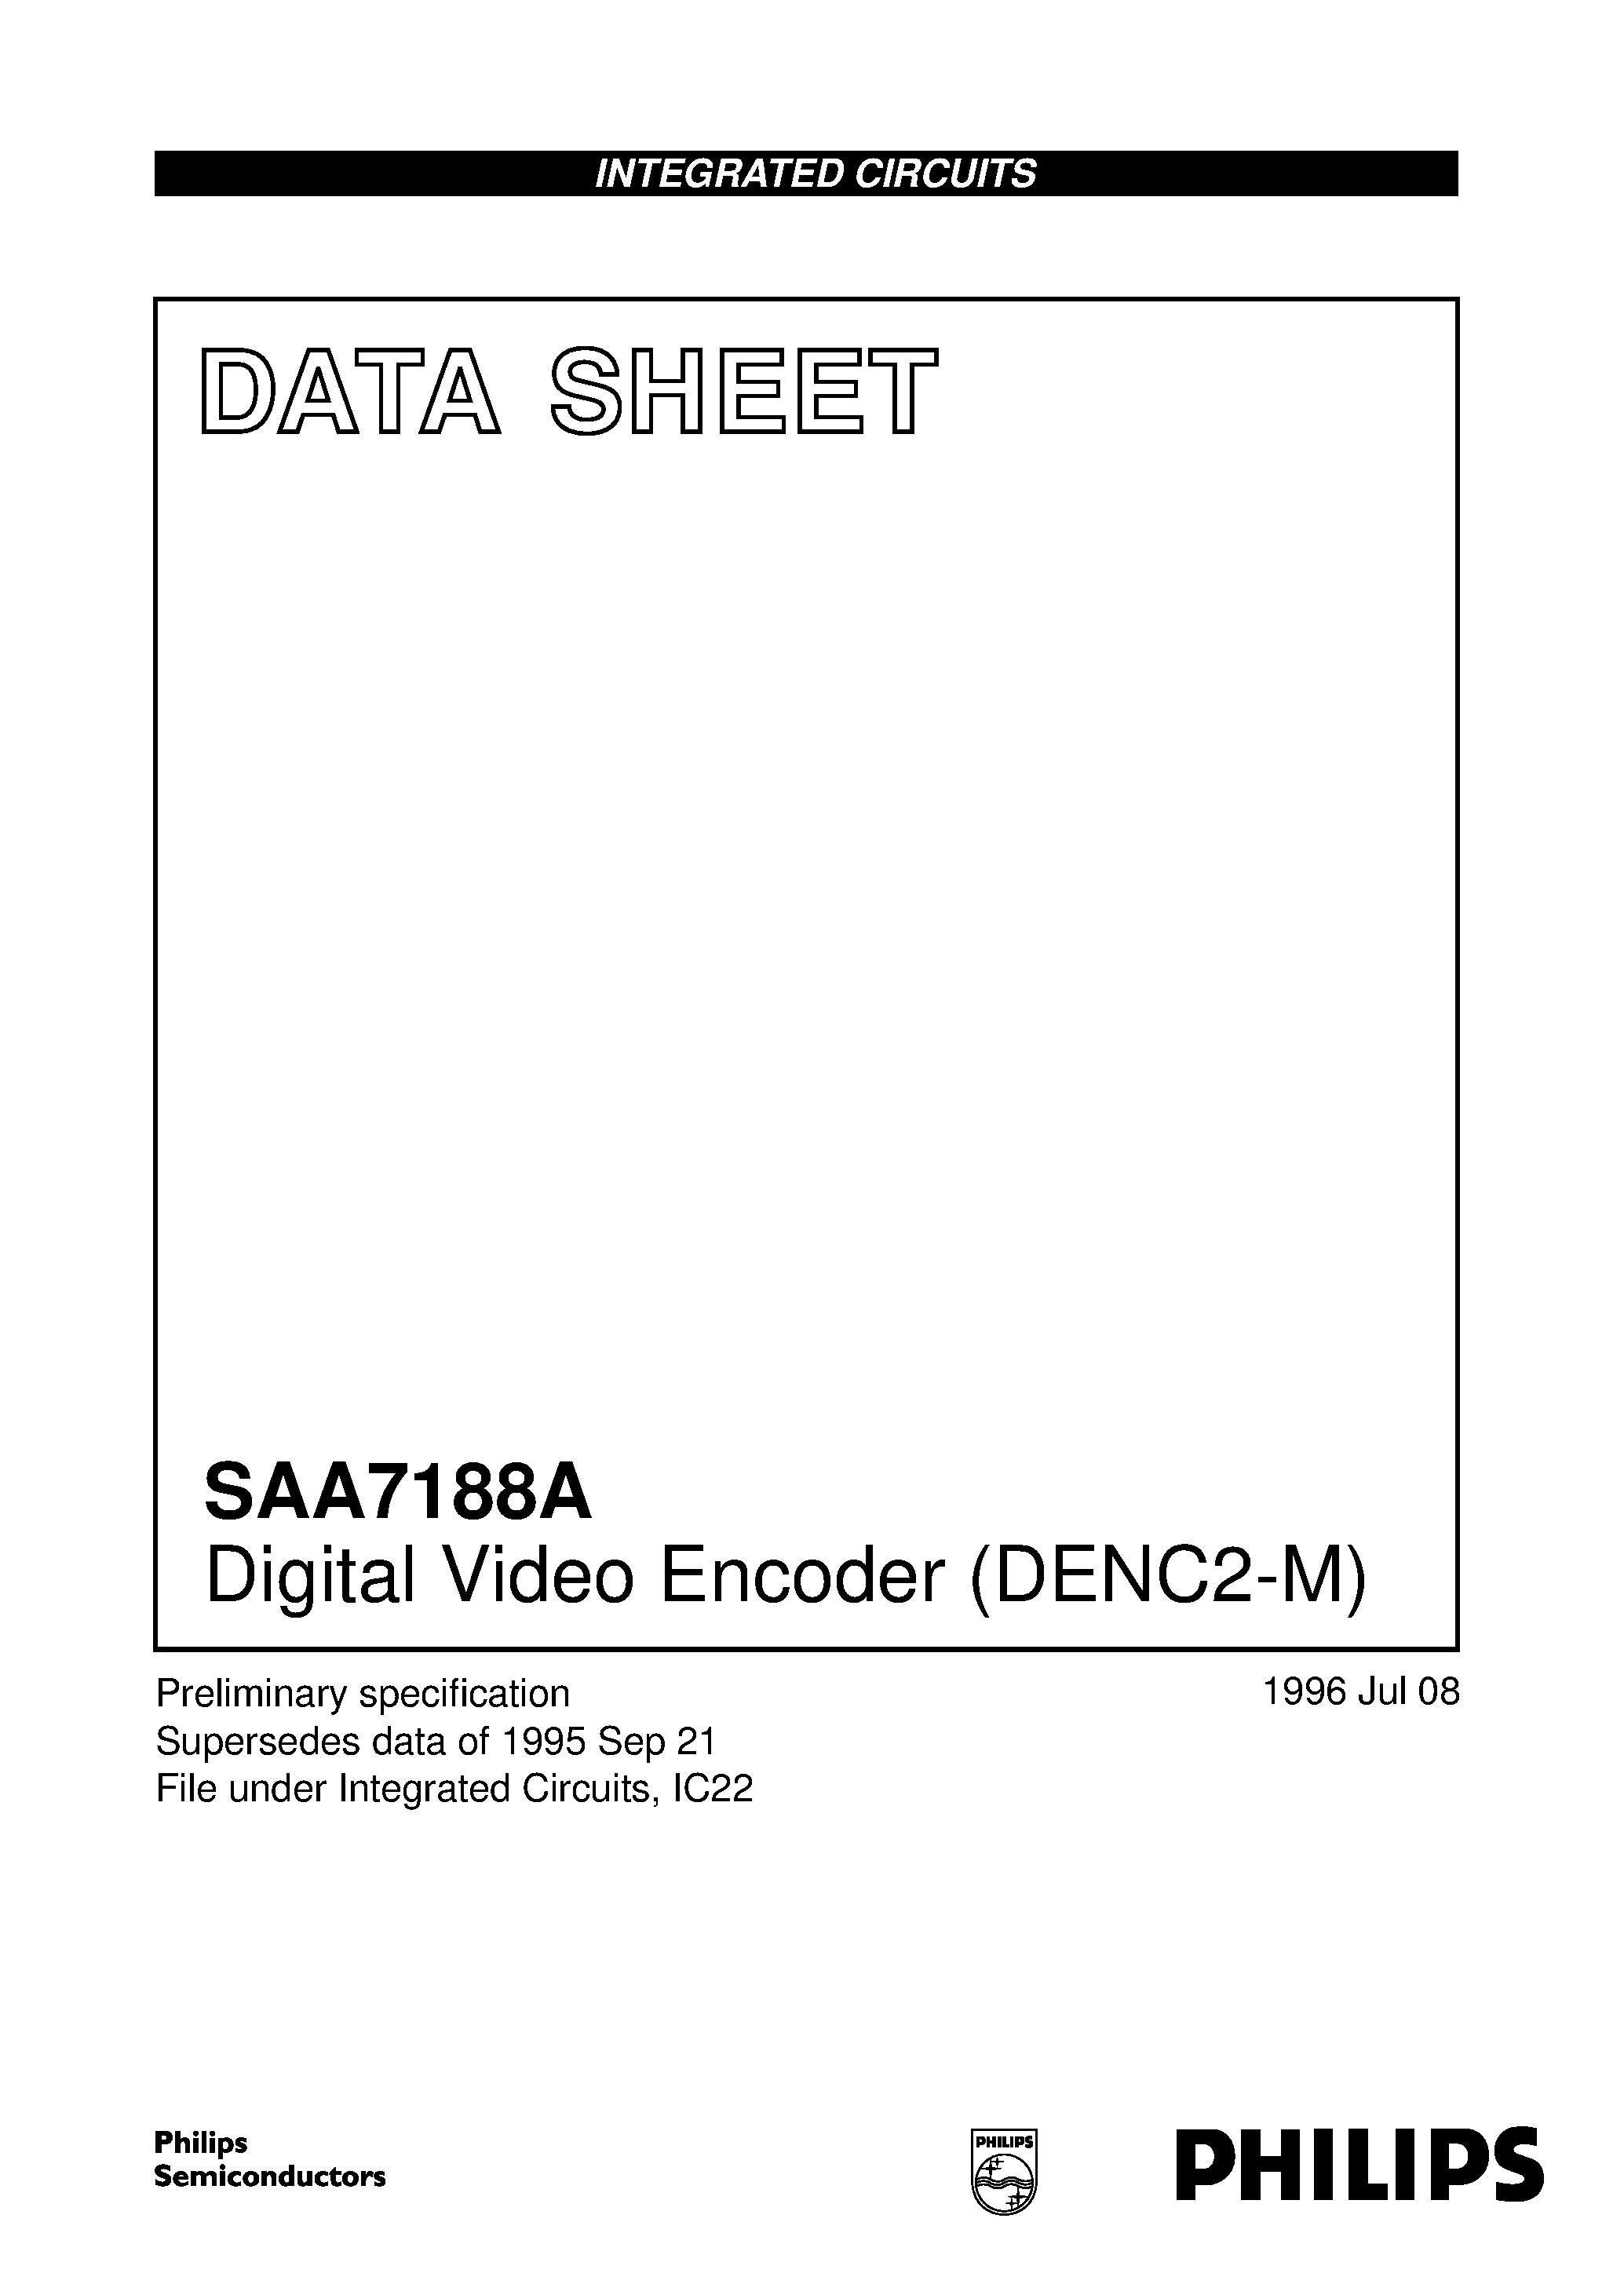 Даташит SAA7188 - Digital Video Encoder DENC2-M страница 1